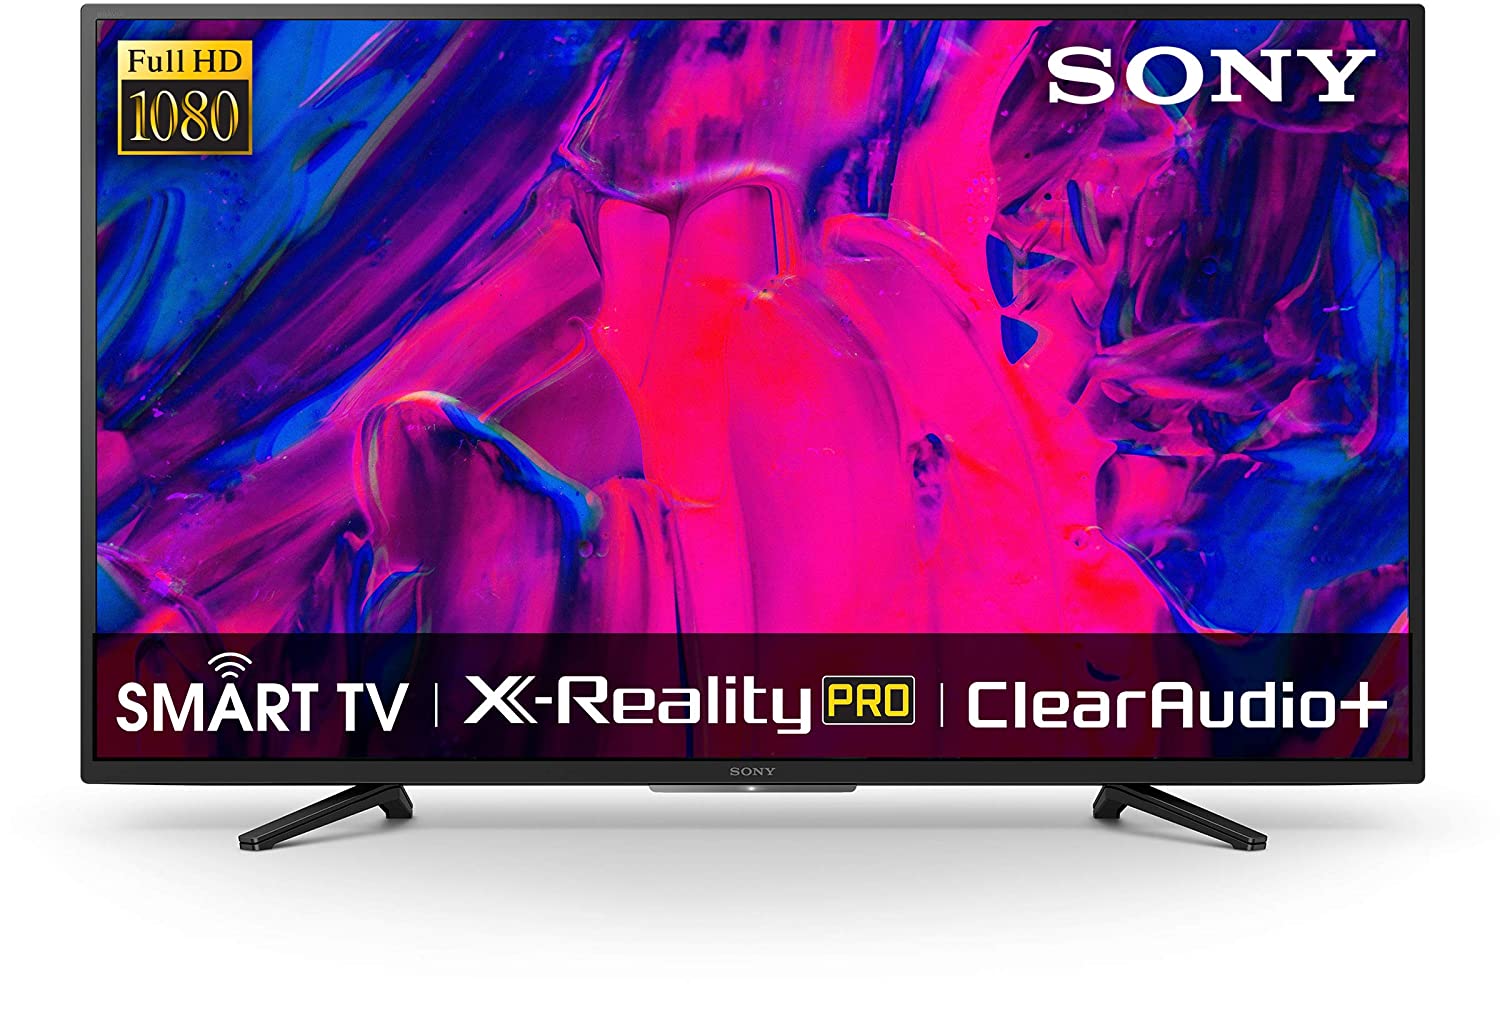 Sony Bravia 108 cm Smart TV Offers